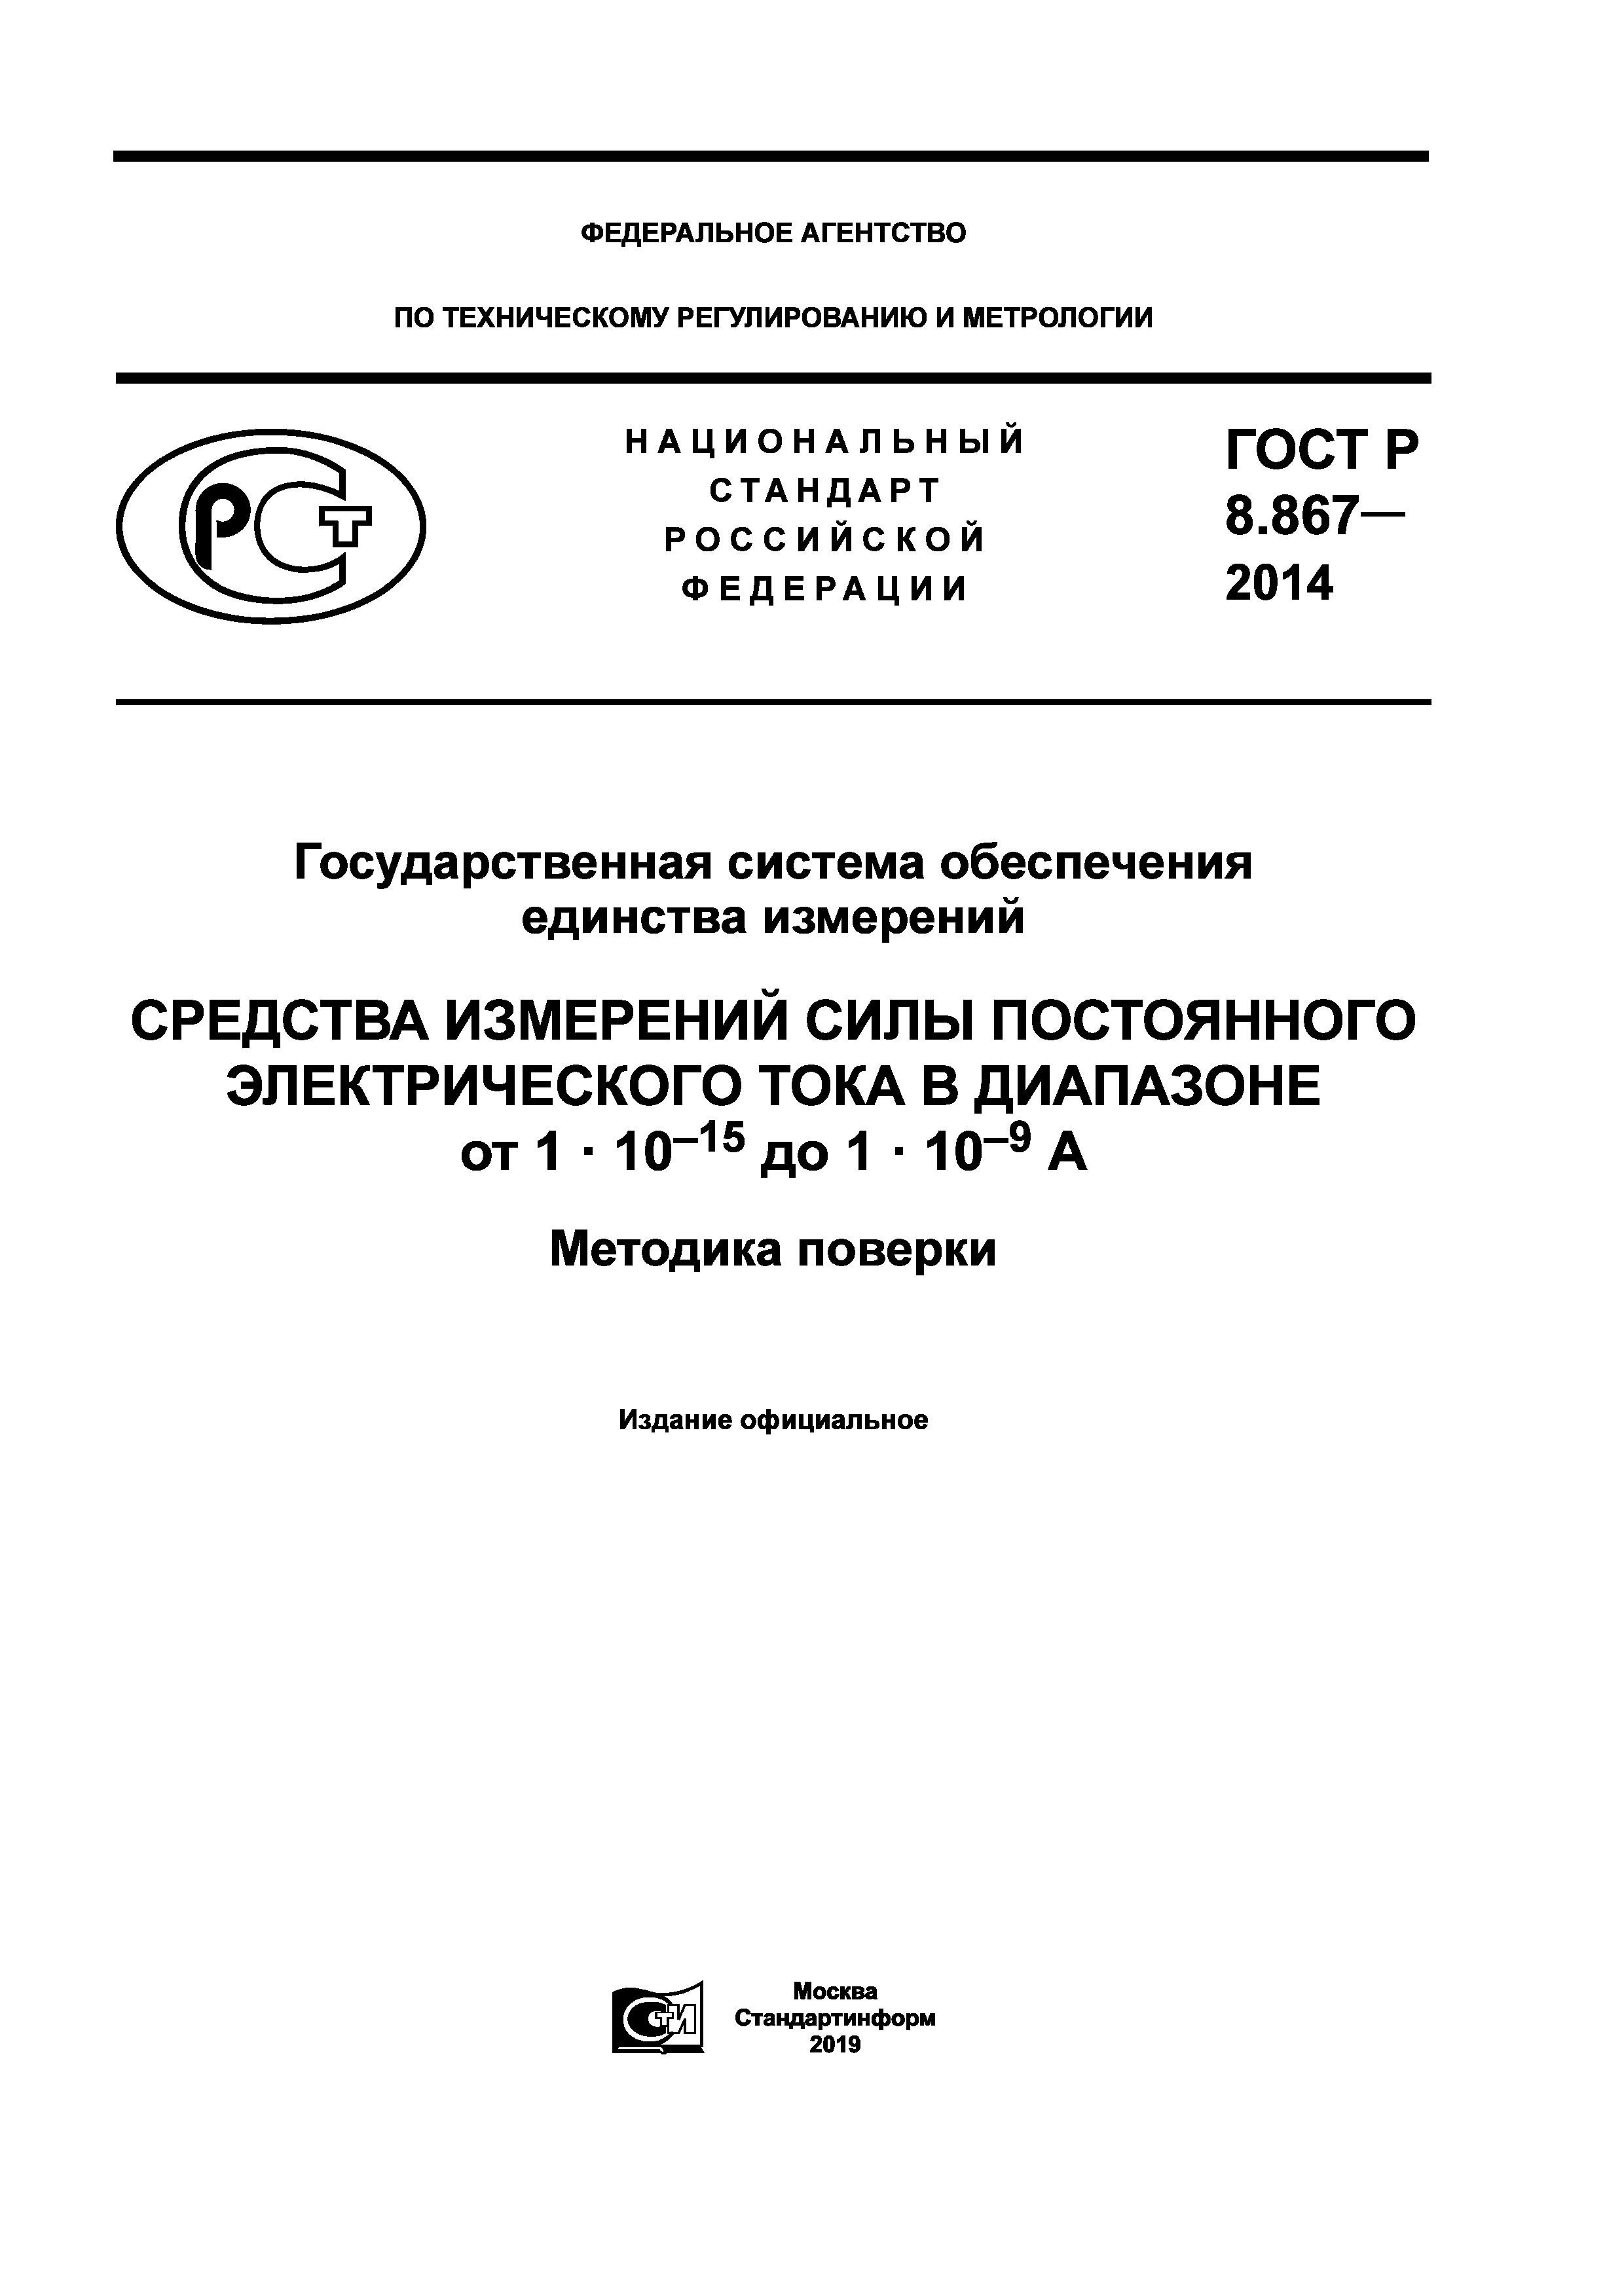 ГОСТ Р 8.867-2014